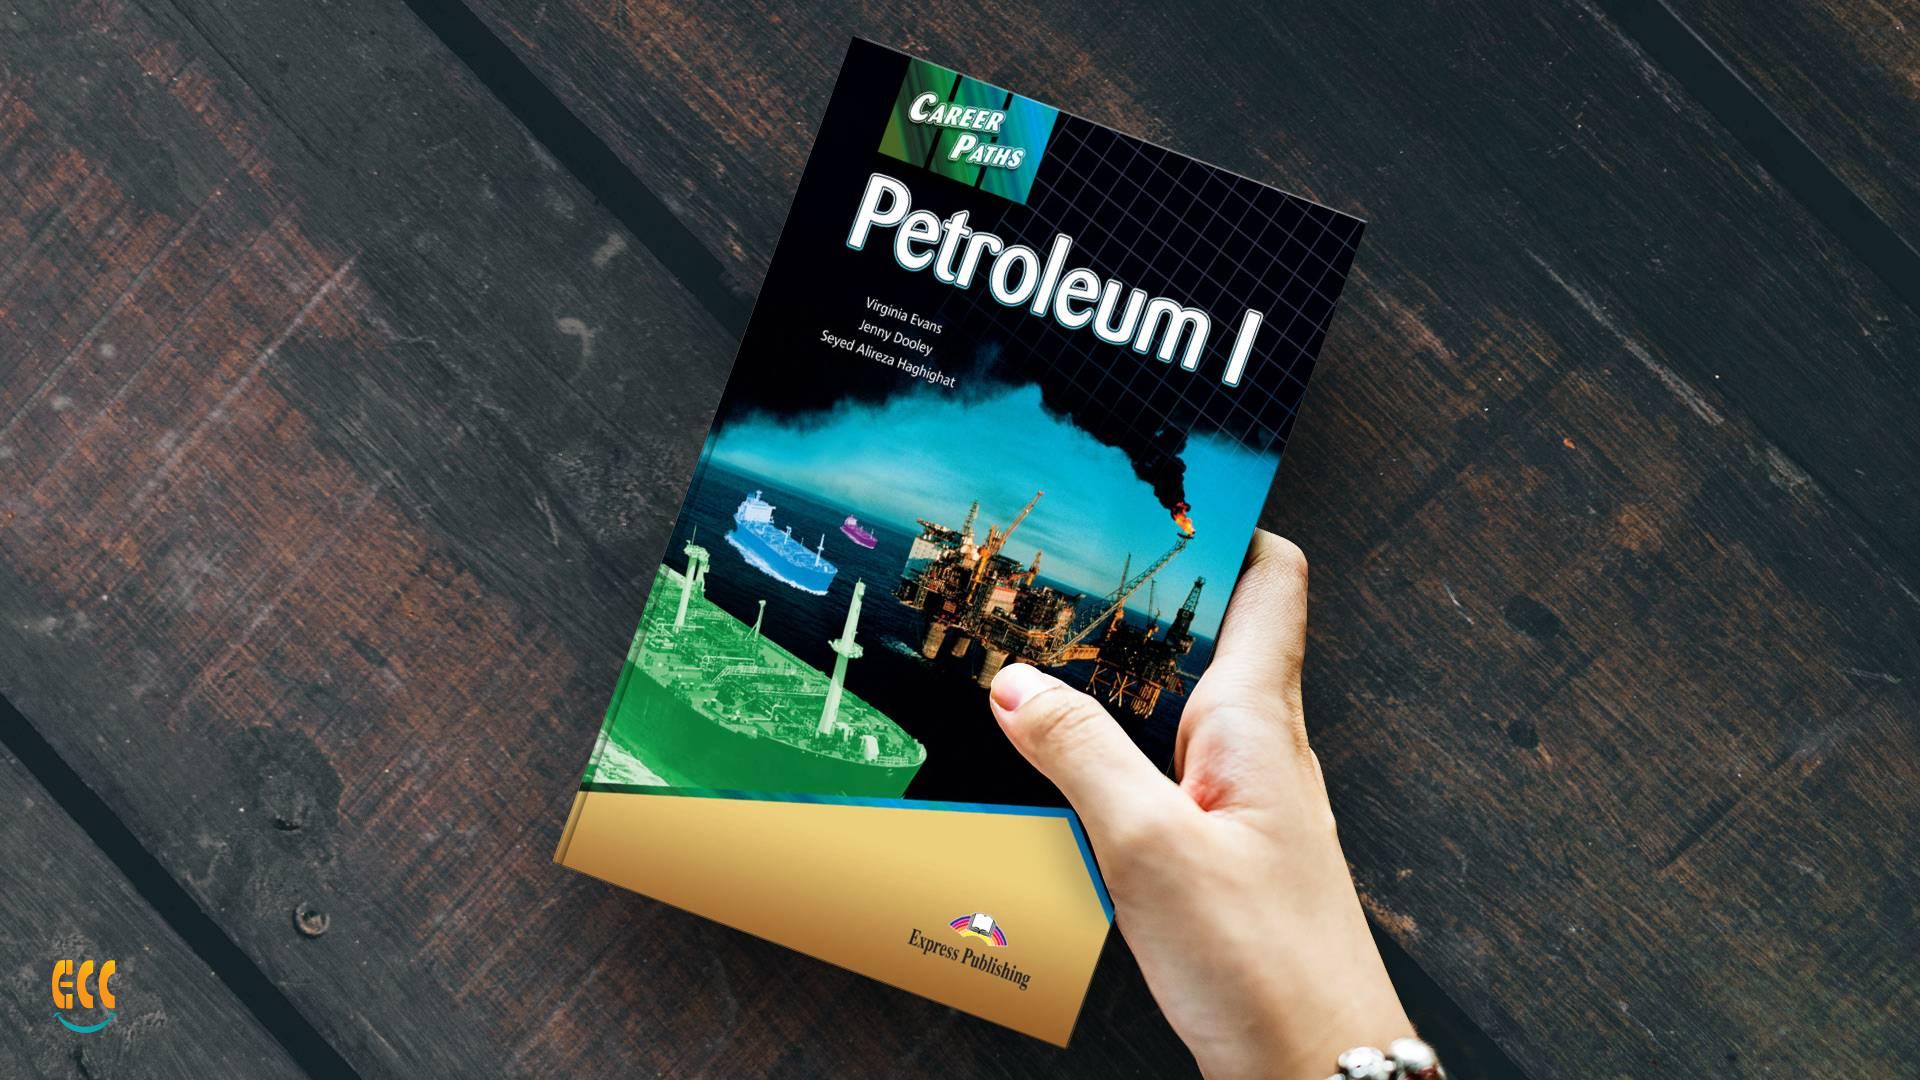 Career Paths Petroleum 1 - ECC